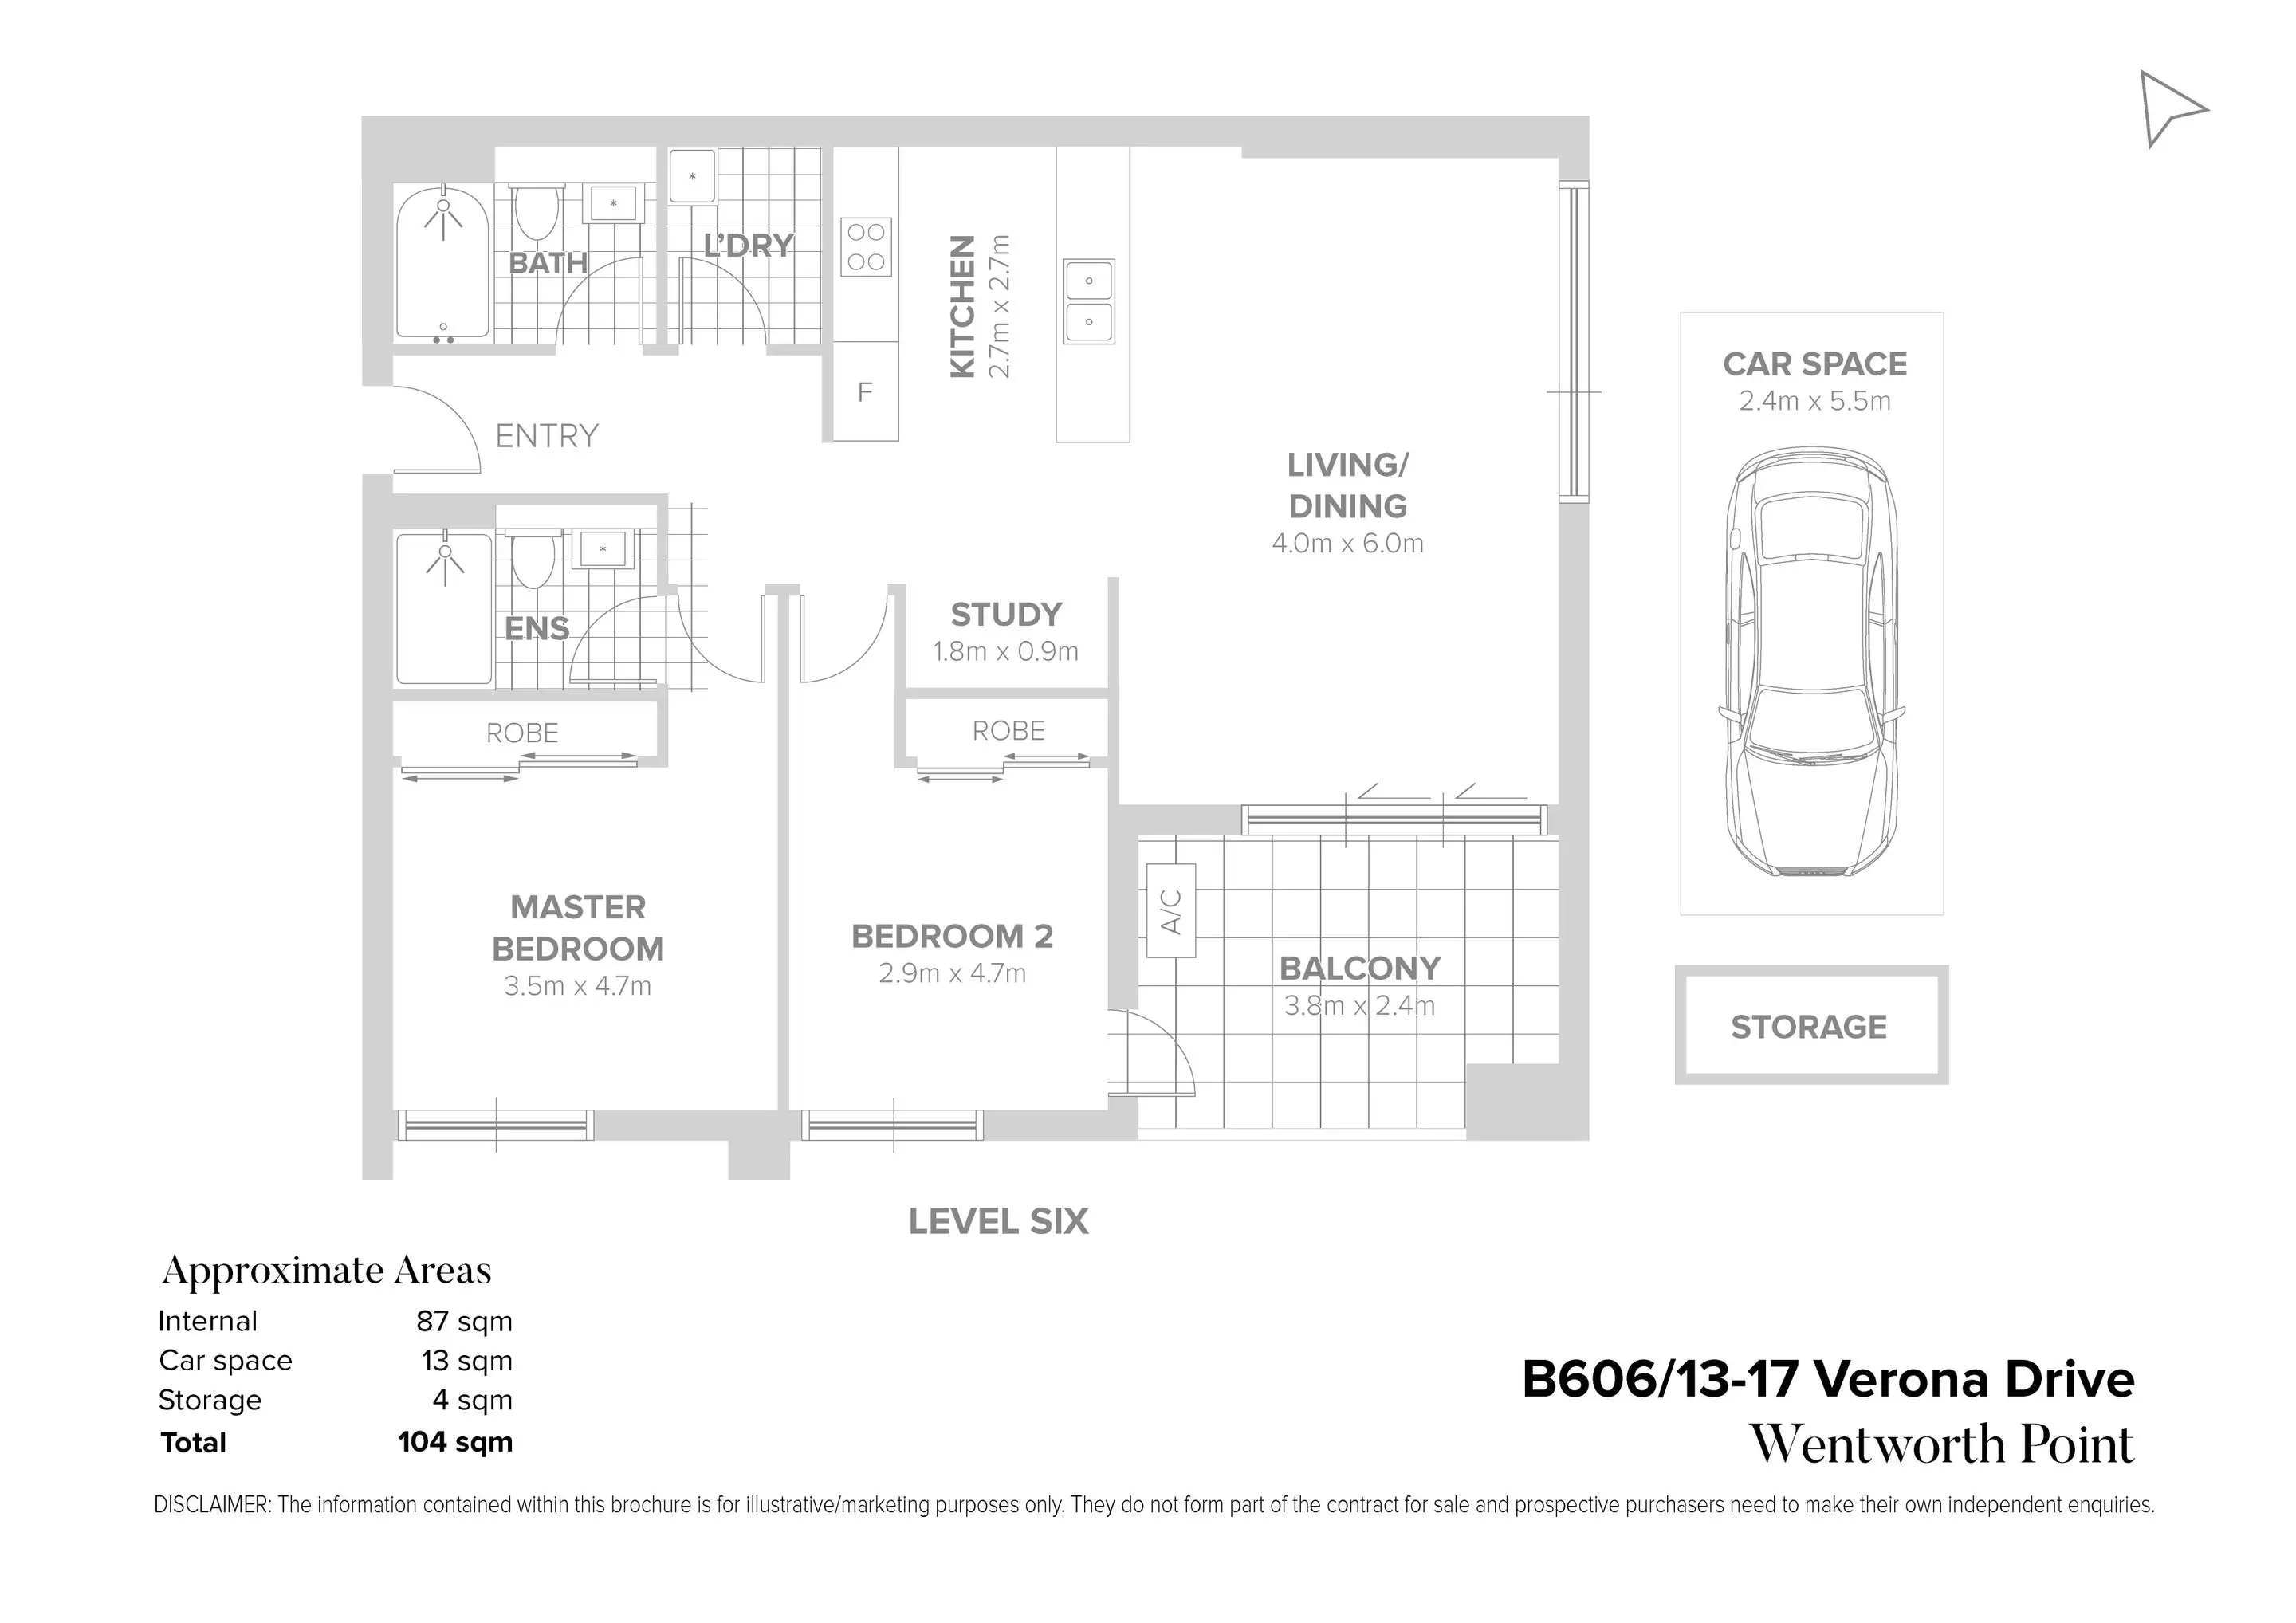 B606/13-17 Verona Drive, Wentworth Point Sold by Chidiac Realty - floorplan